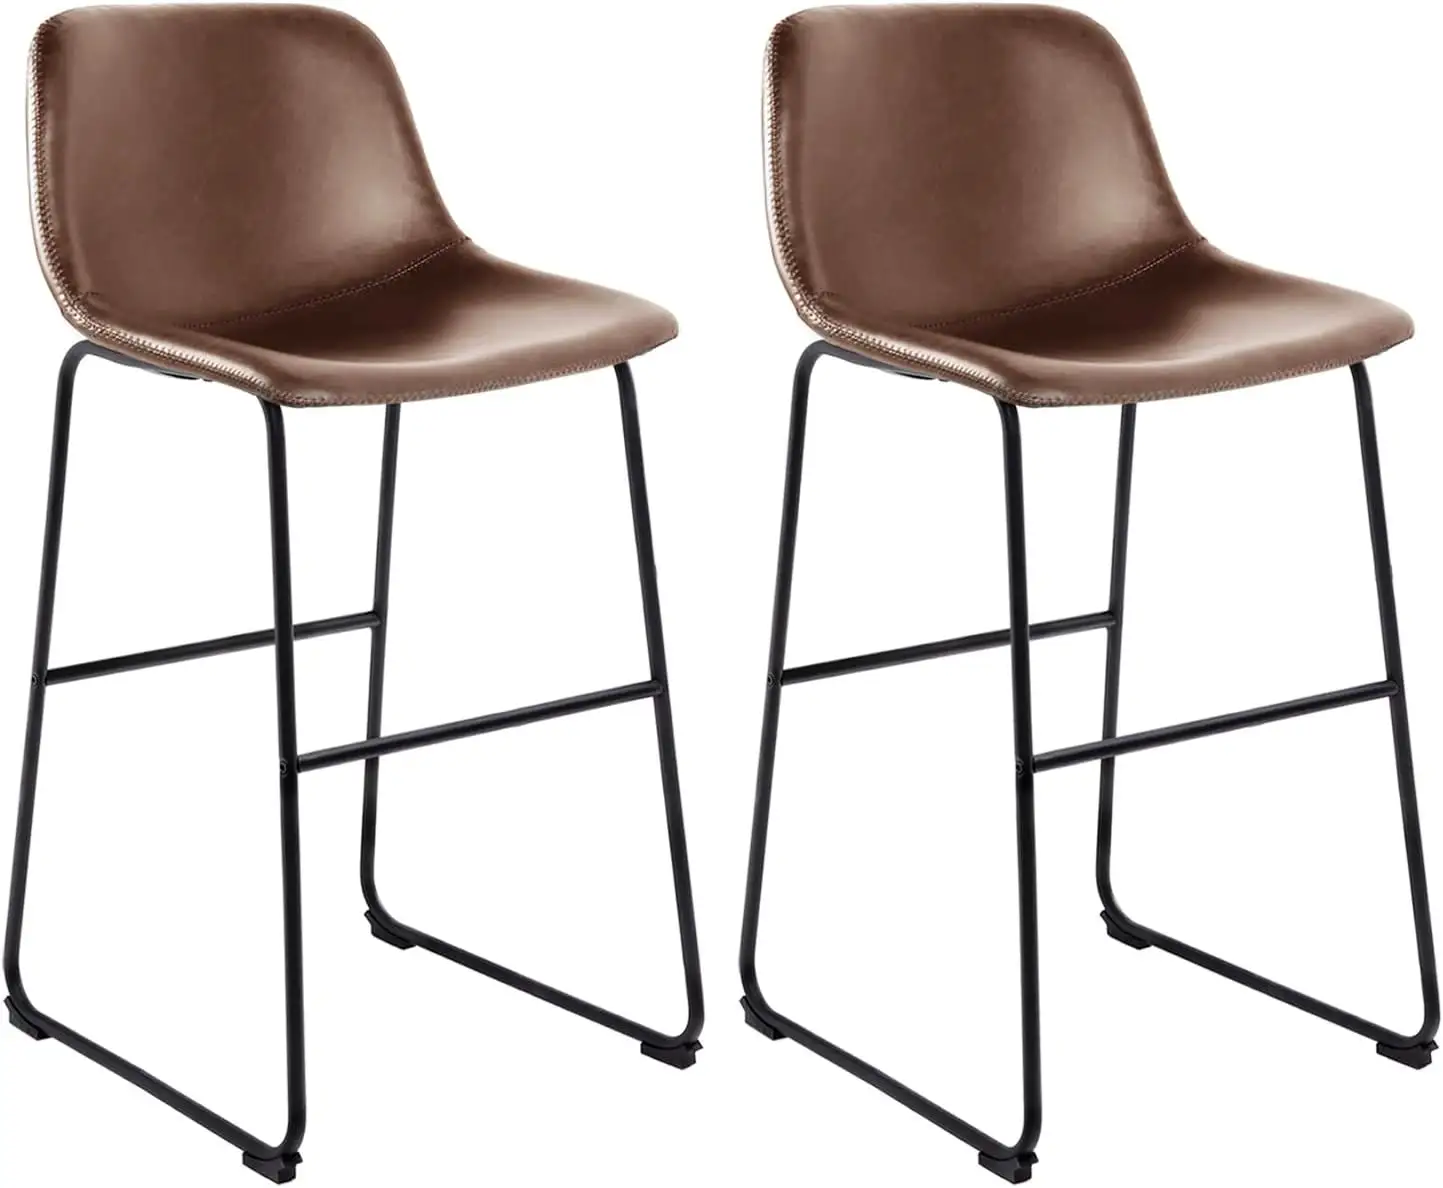 Bangku kulit imitasi, Set 2 kursi Bar tinggi 30 inci dengan belakang, kursi Bar tanpa lengan dengan kaki logam